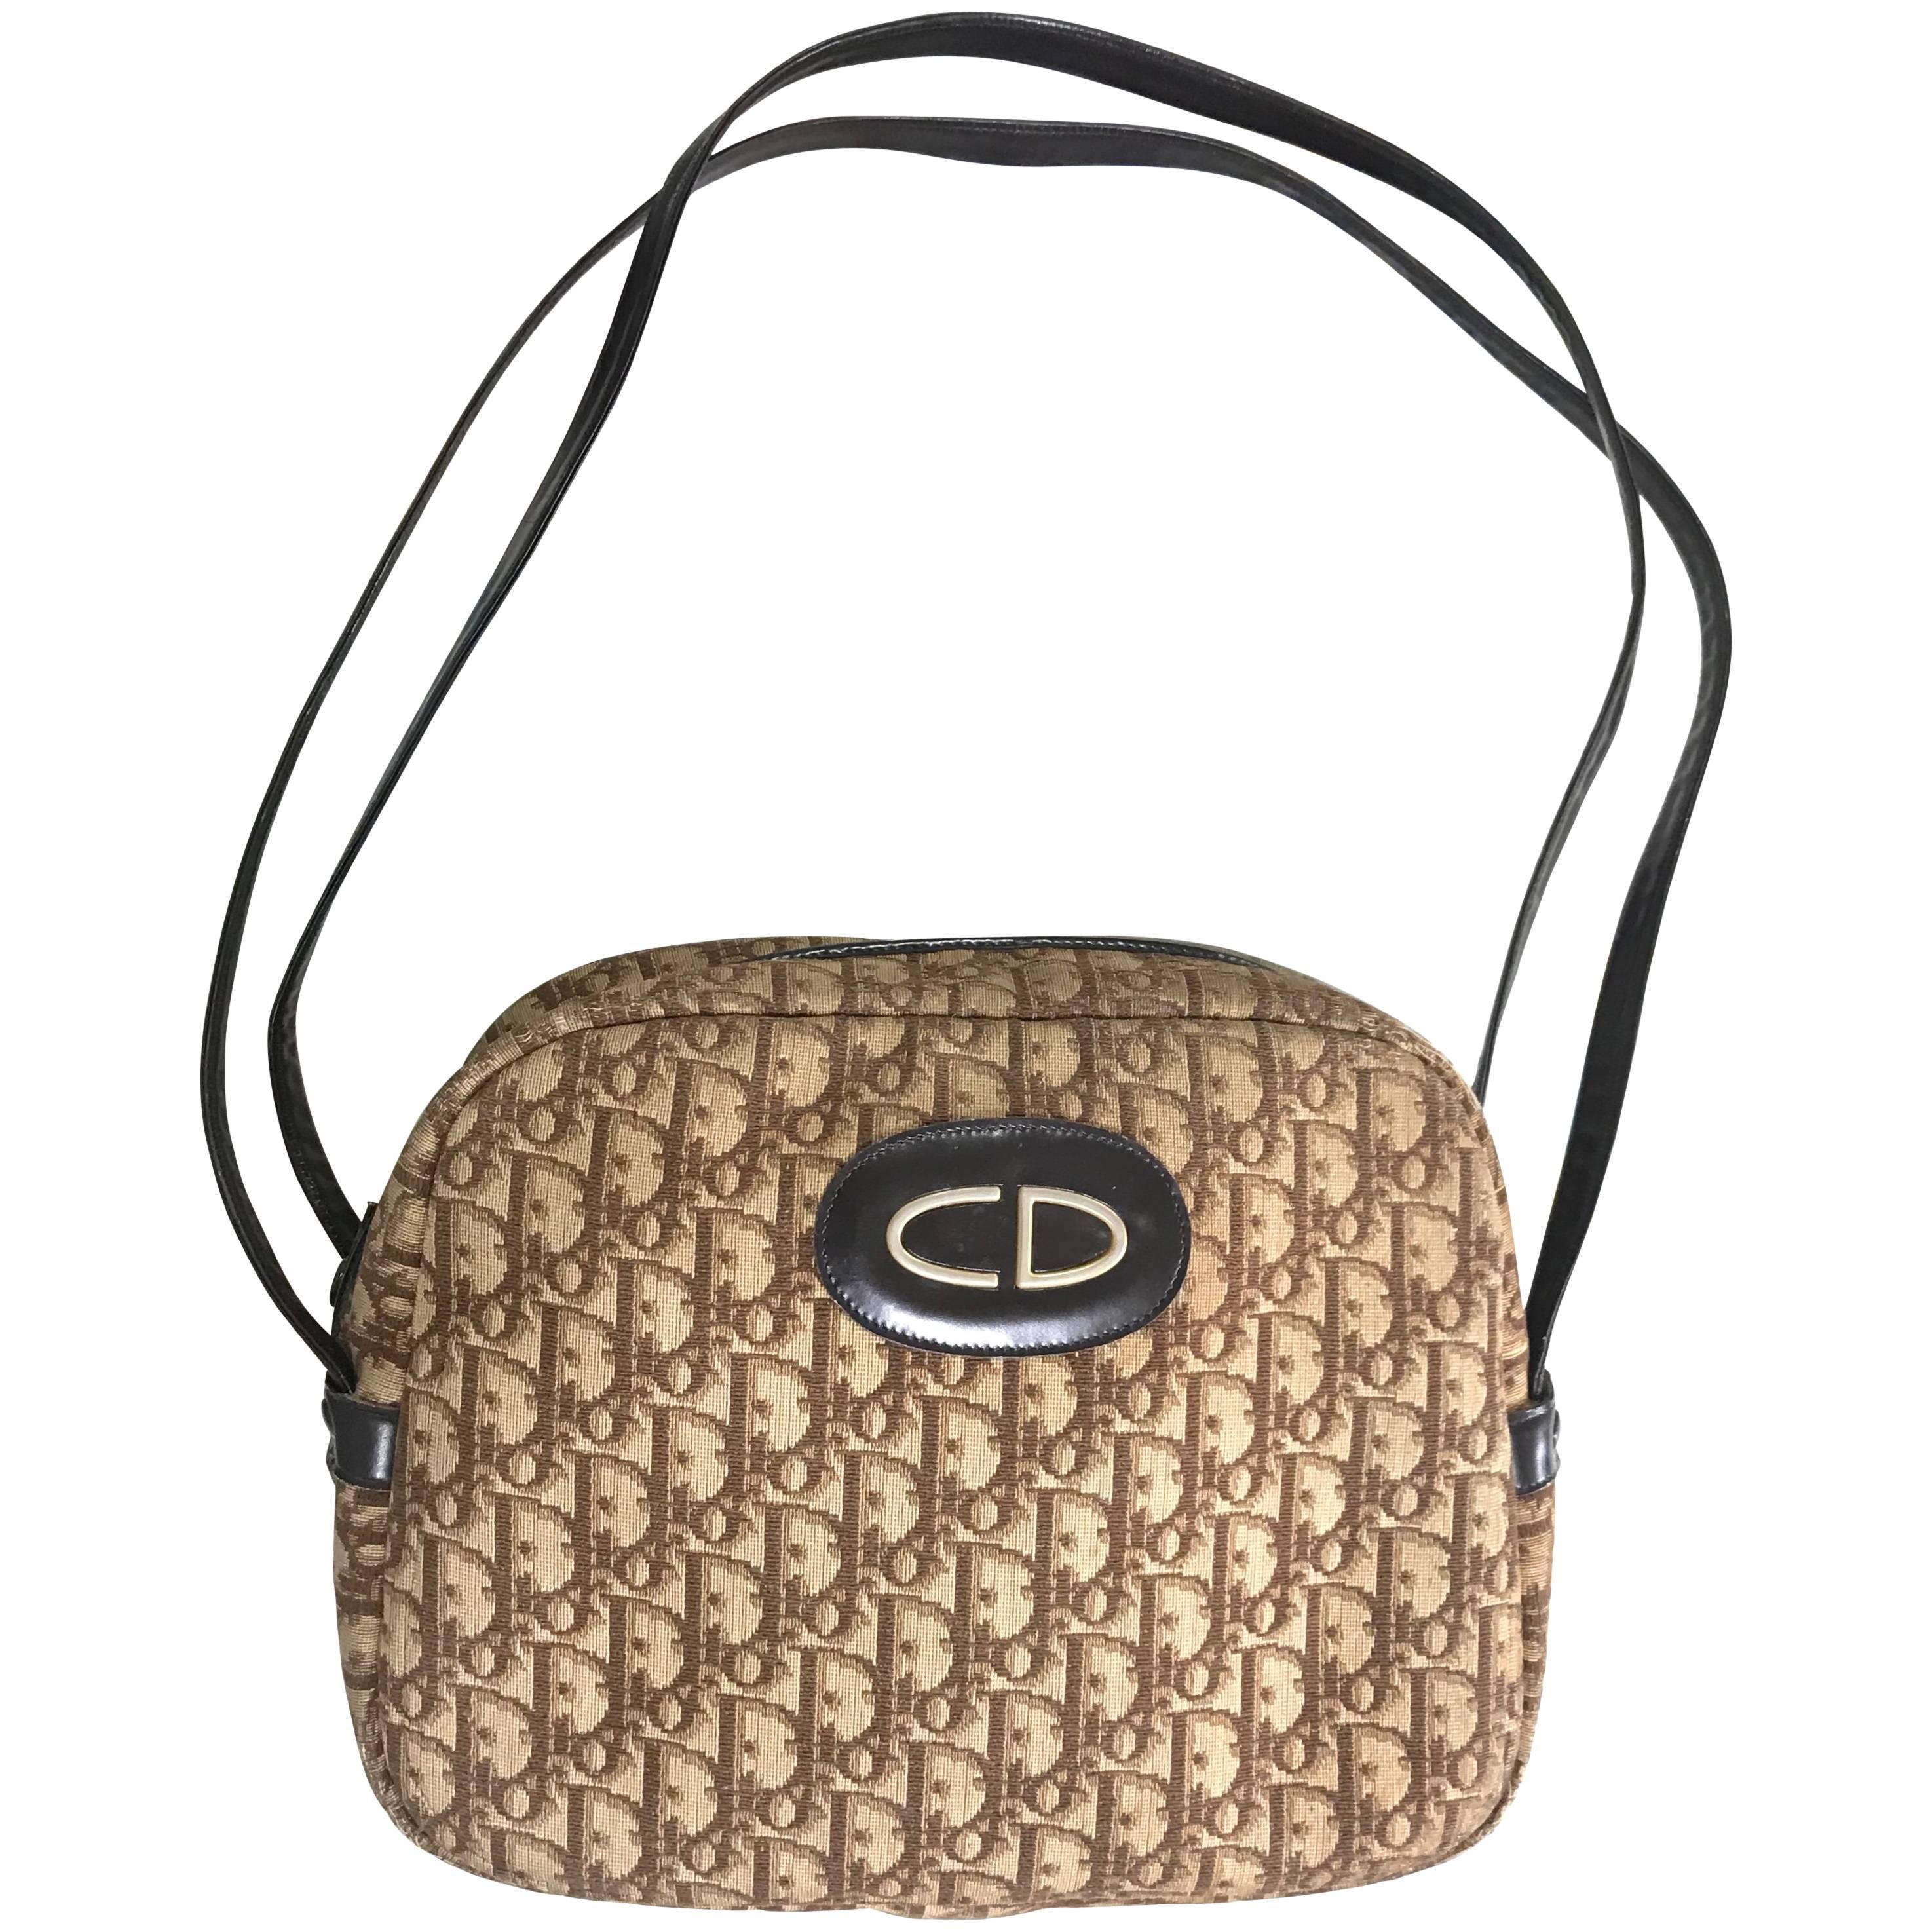 Vintage Christian Dior brown trotter jacquard handbag with logo motif.